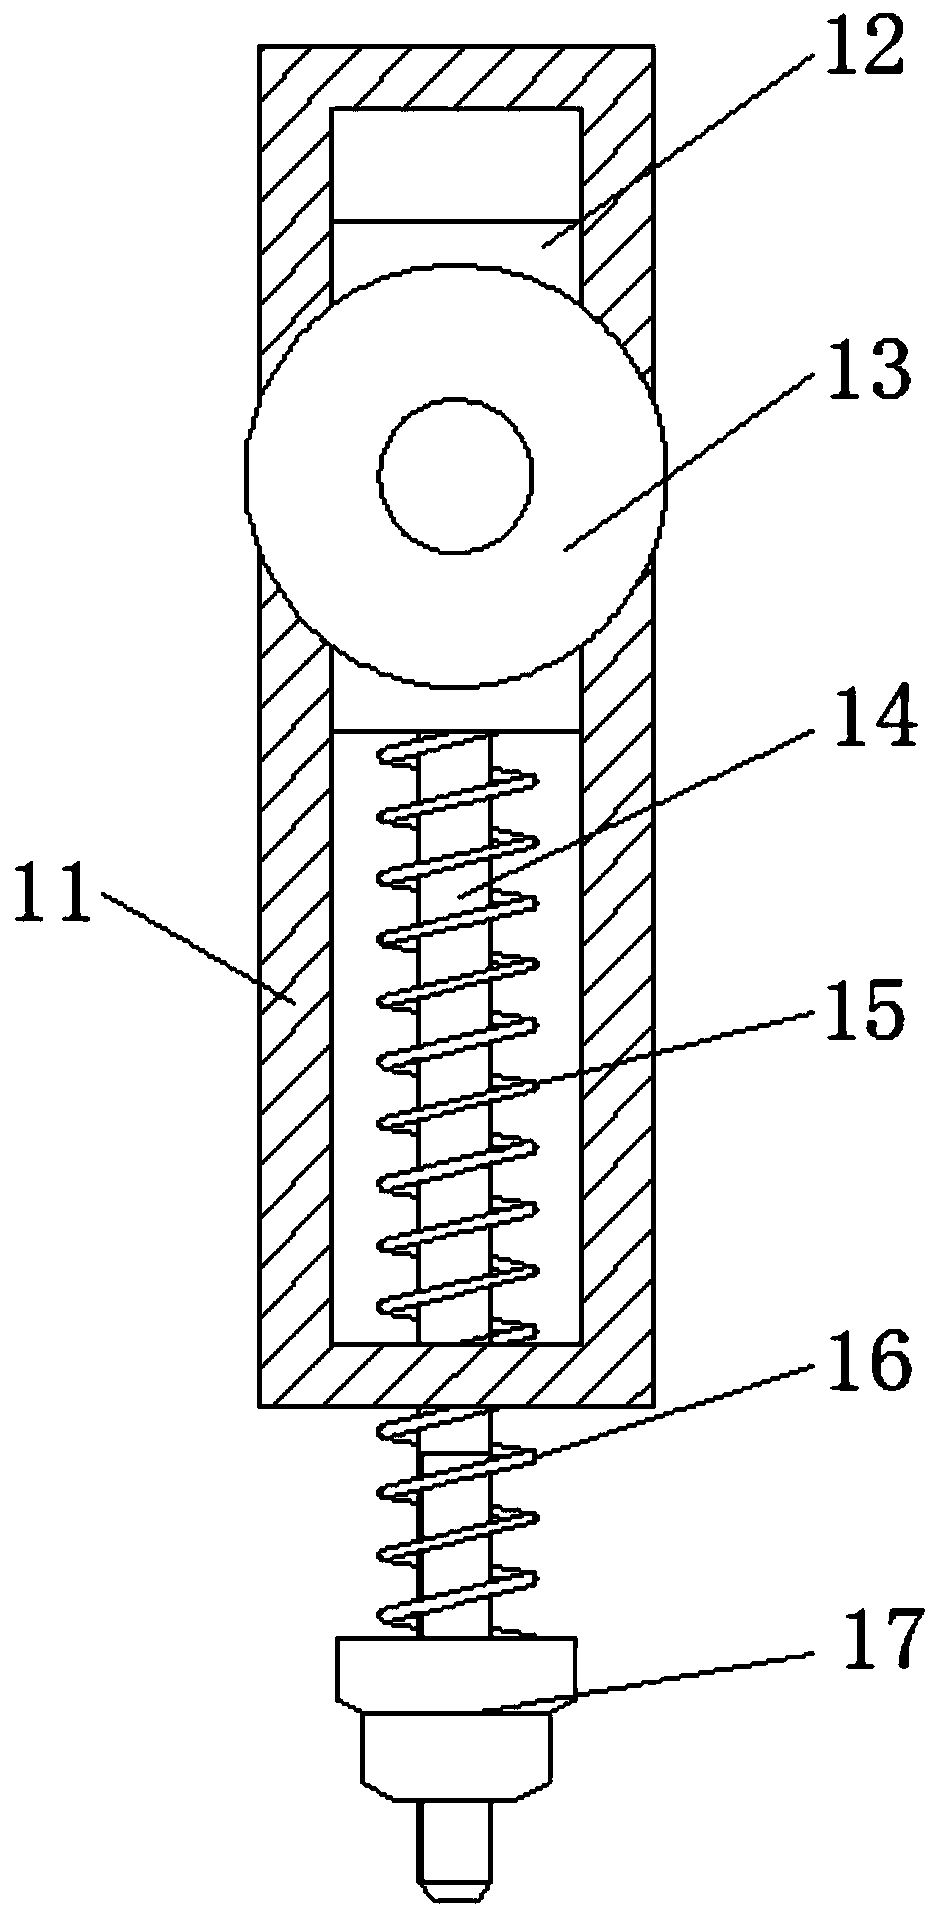 Tension-adjustable textile fabric winder based on Hooke law principle